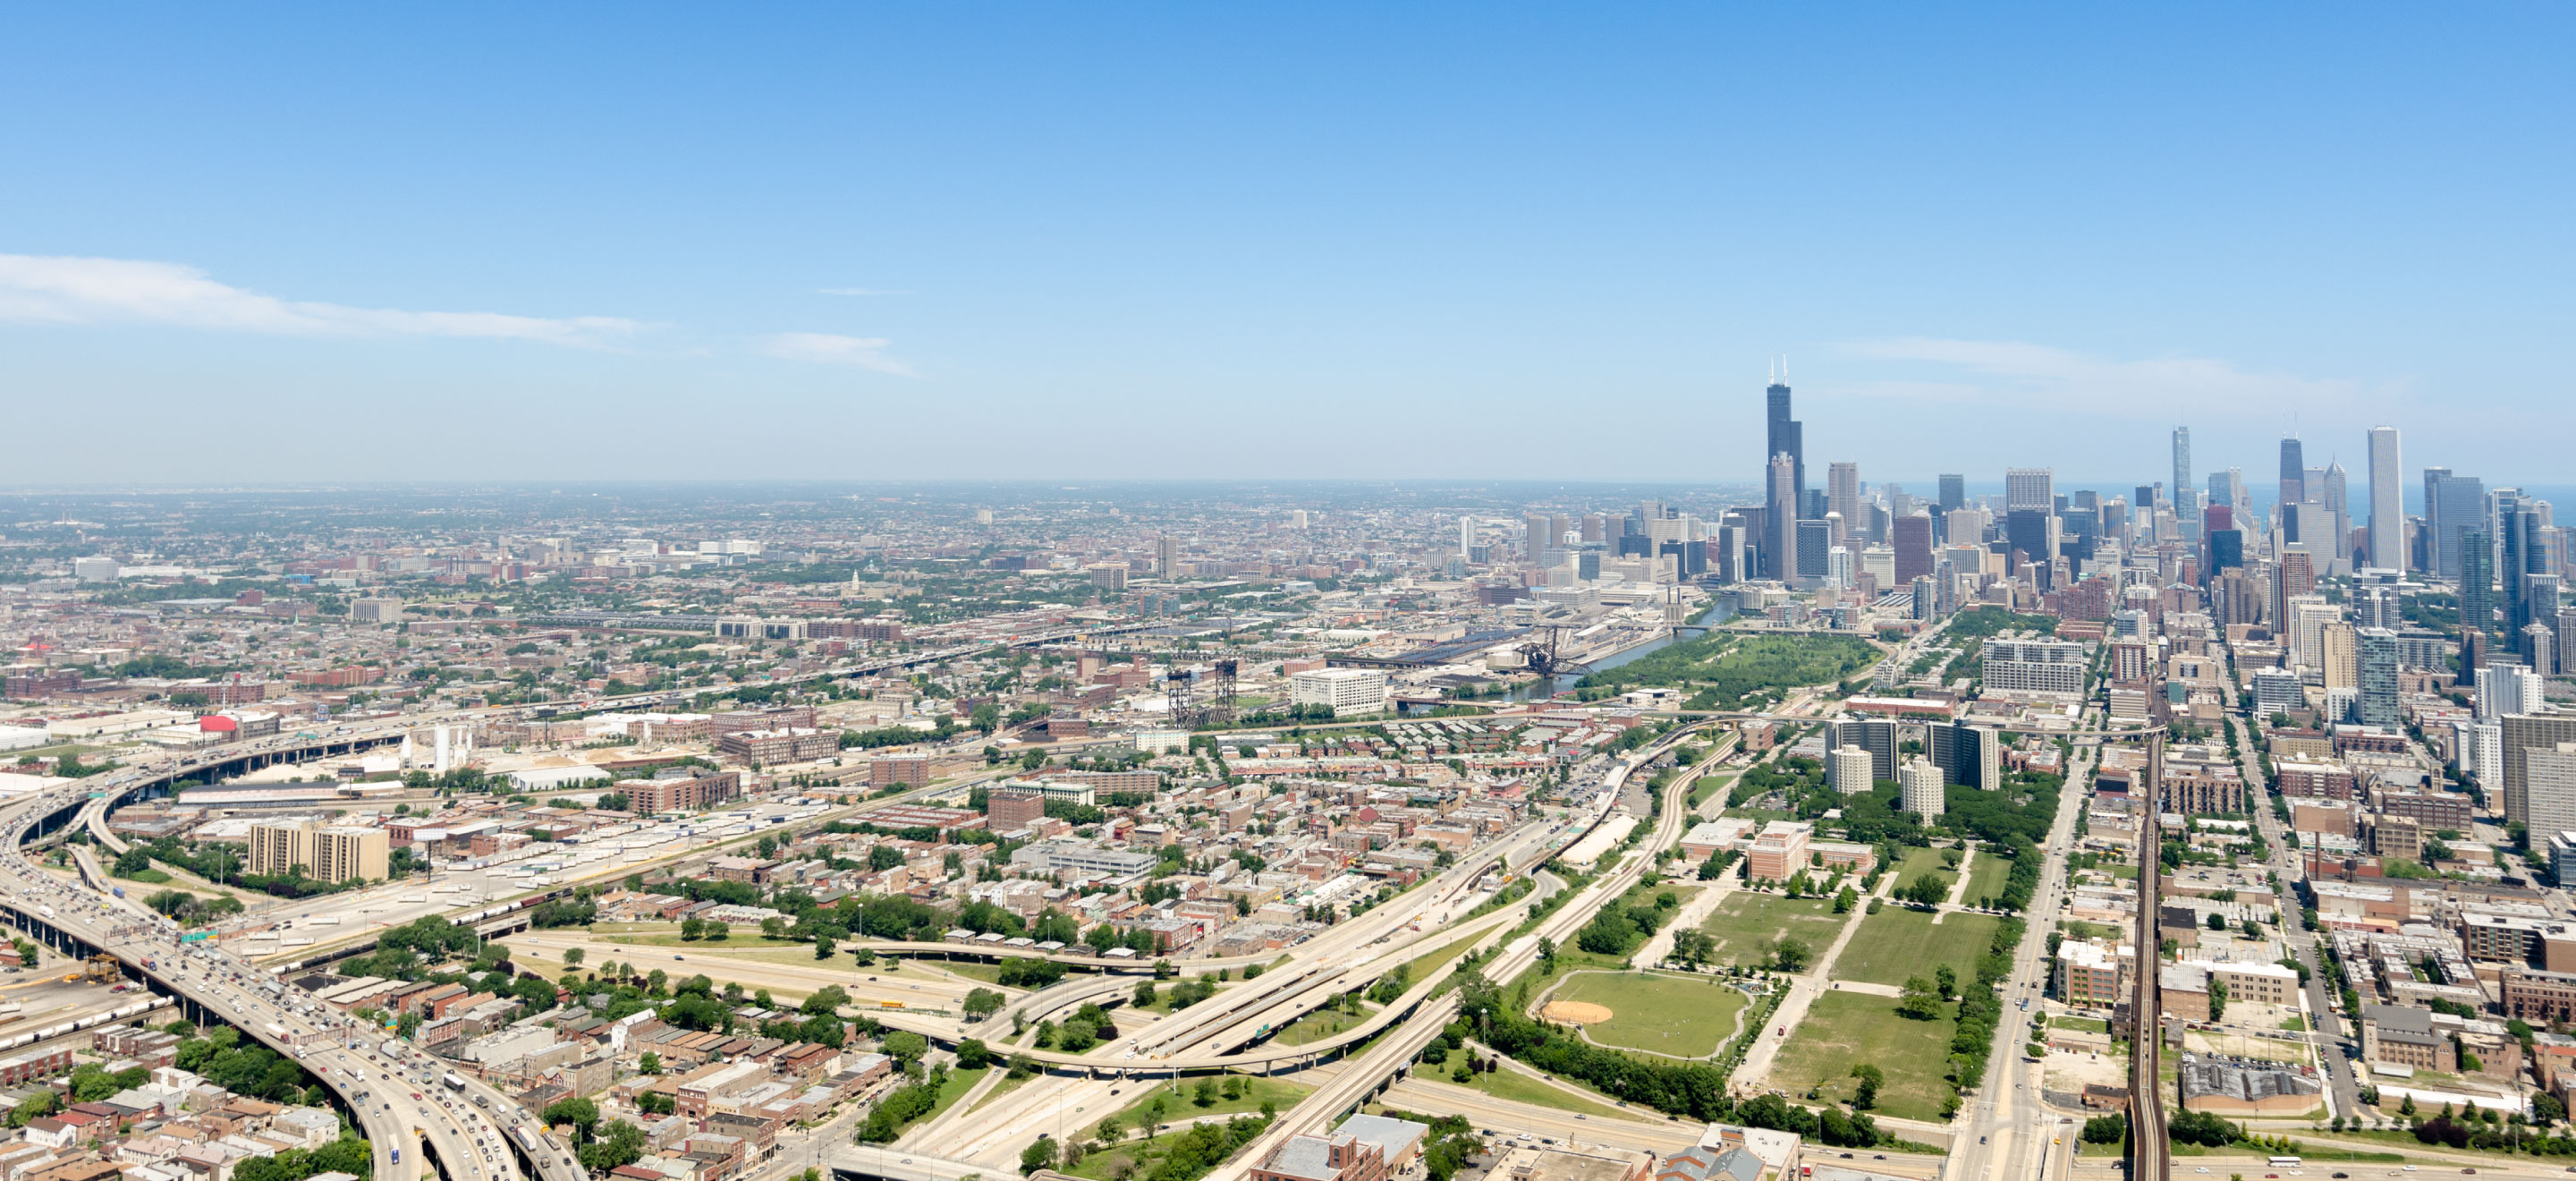 Chicago skyline and surrounding neighborhoods